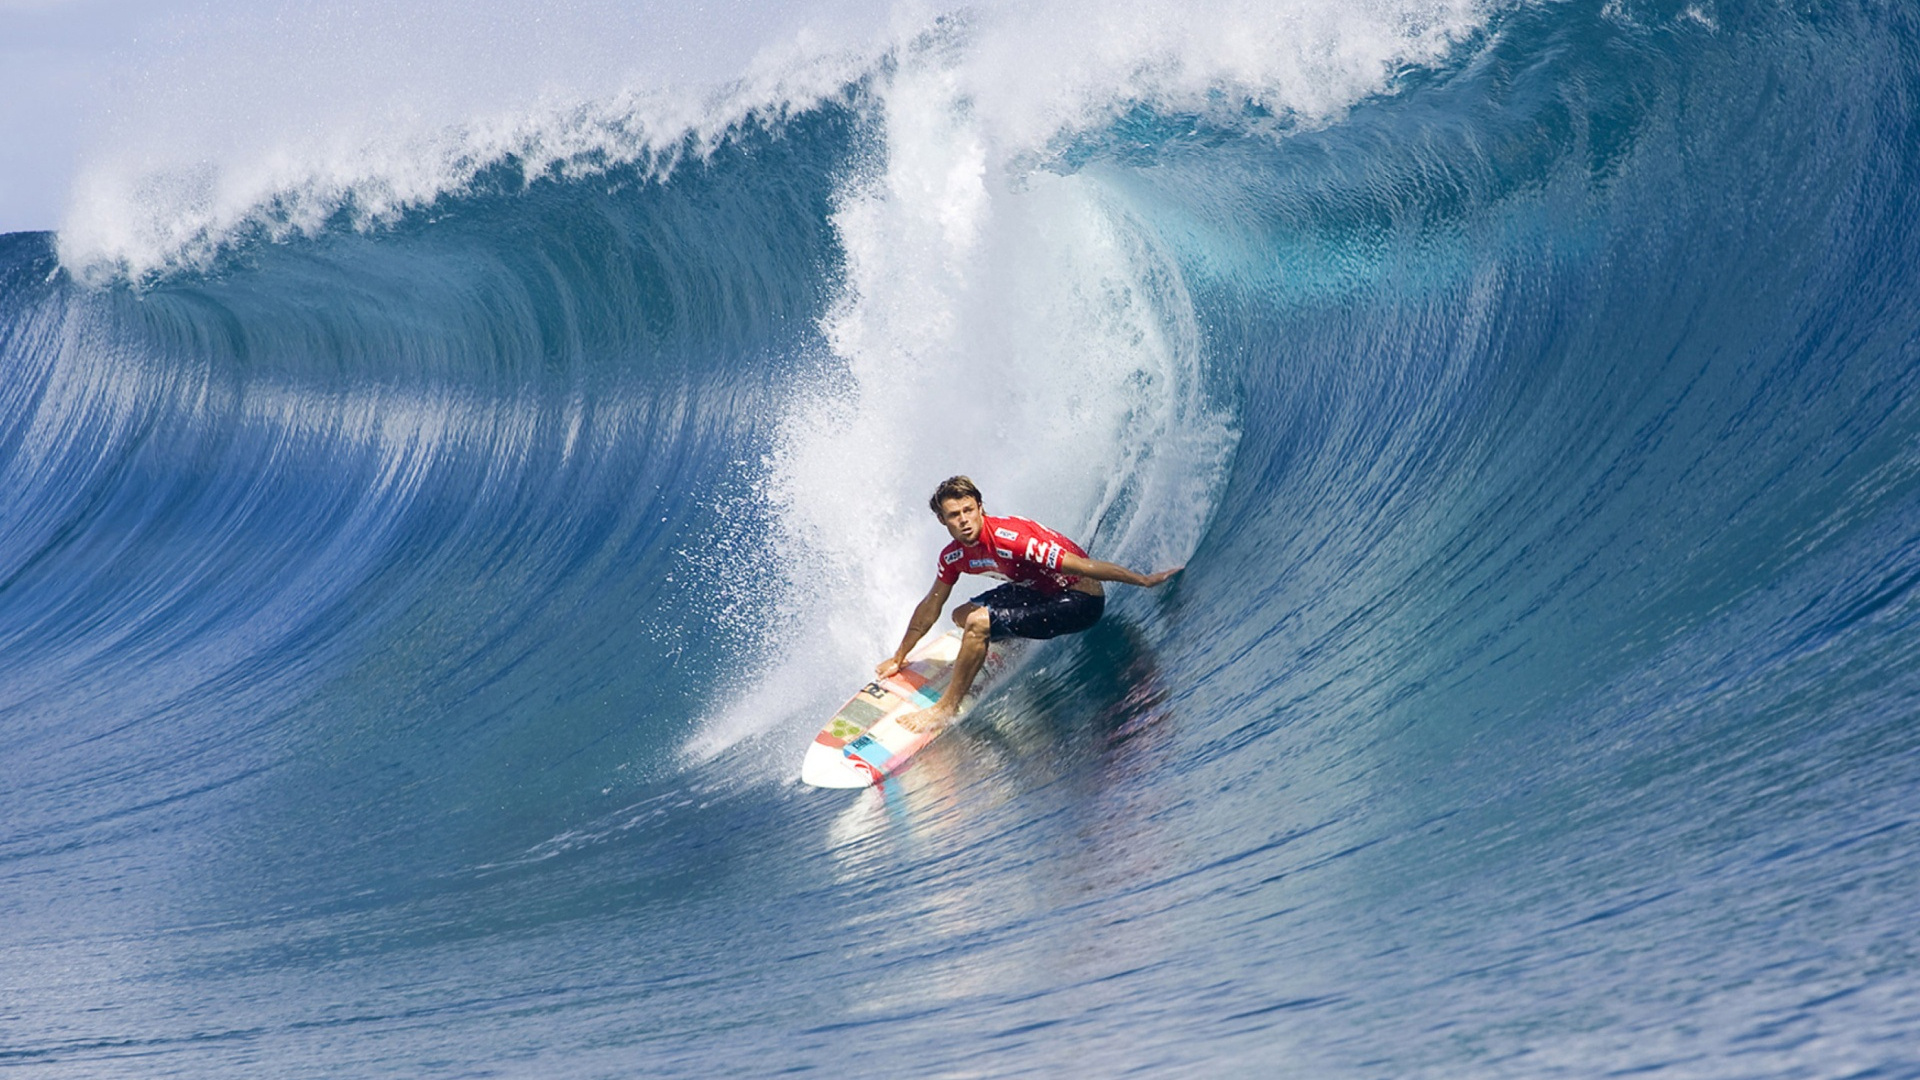 Surfing: Professional surfer's performance at 2020 Summer Olympics, Tokyo, Japan. 1920x1080 Full HD Wallpaper.